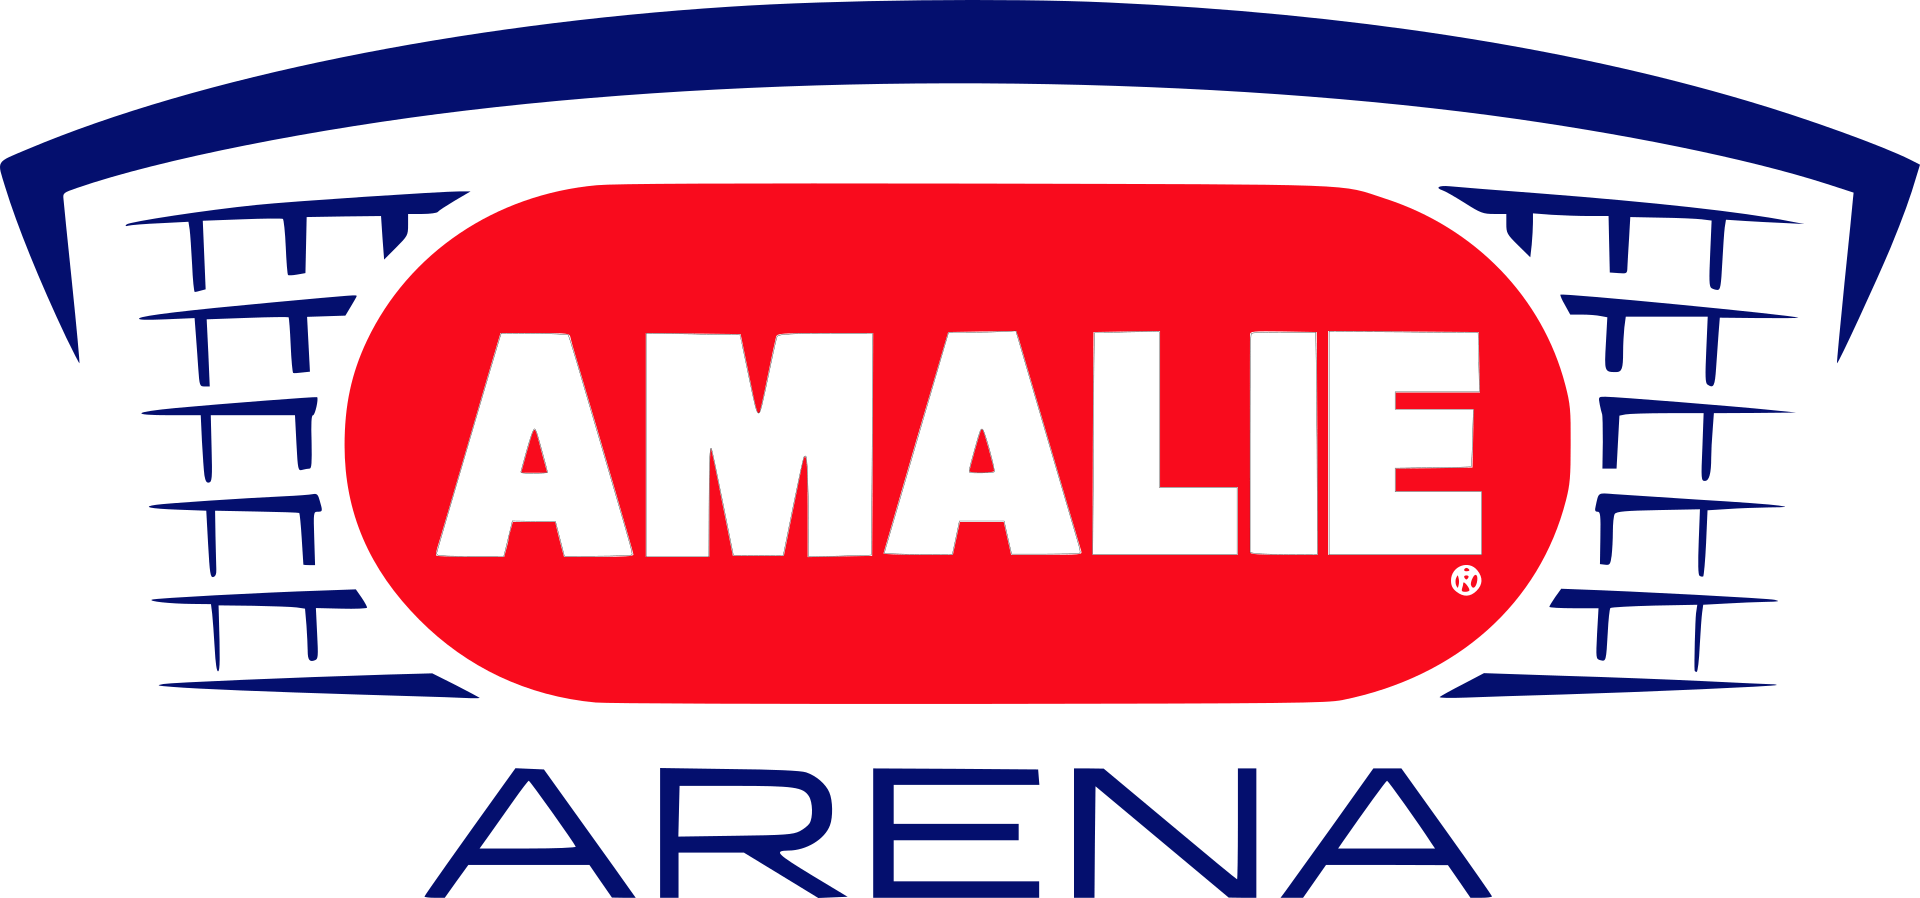 AMALIE Arena Capacity Tampa Bay Lightning